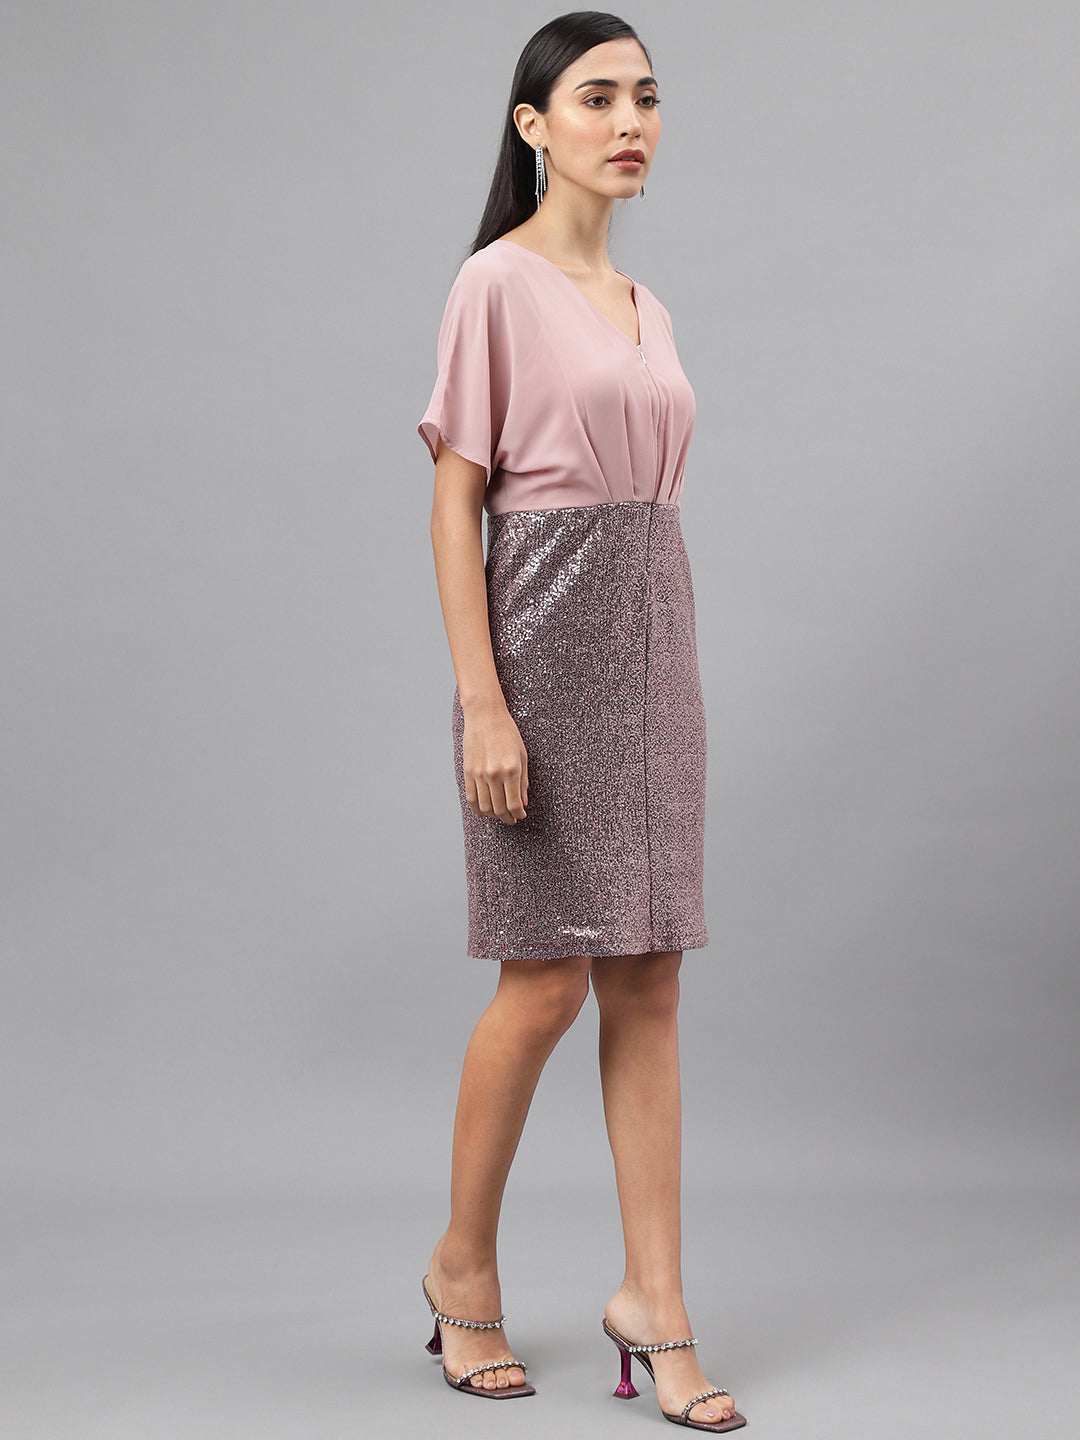 Rosegold Cap Sleeve V-Neck Solid 2 Fir 1 Dress